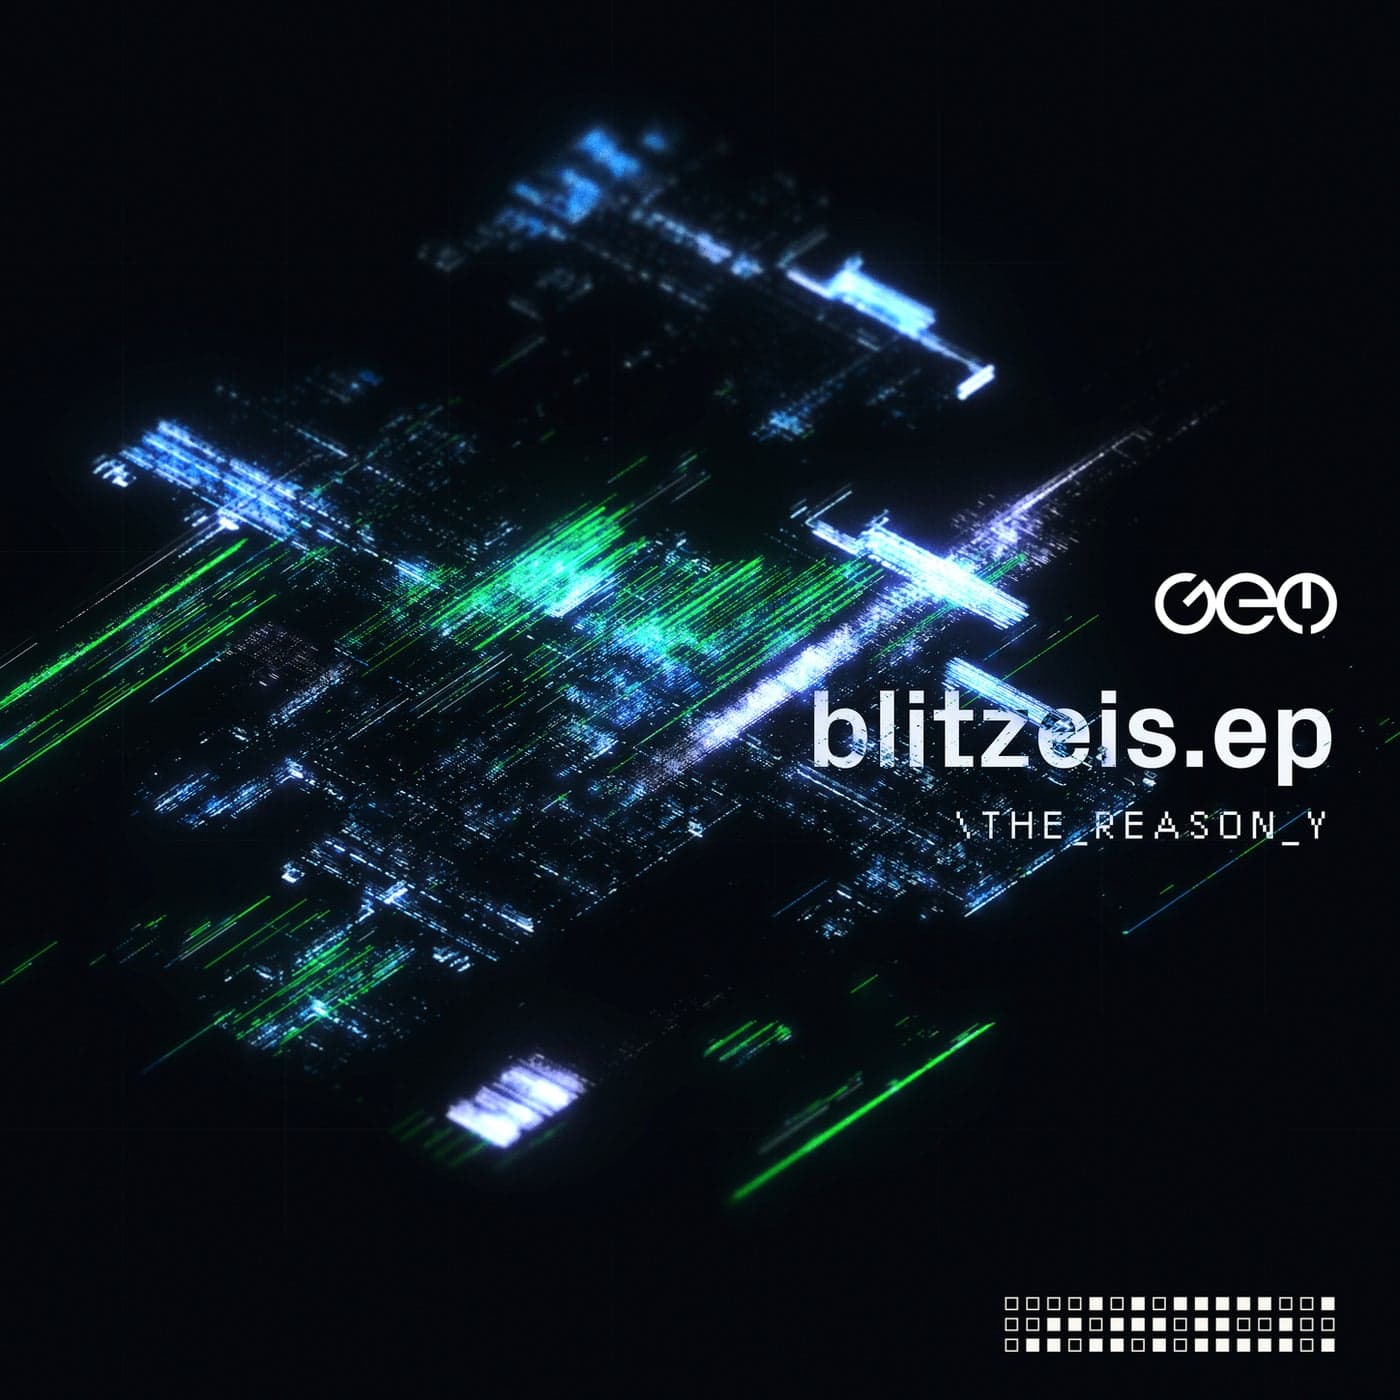 Download The Reason Y - Blitzeis EP on Electrobuzz